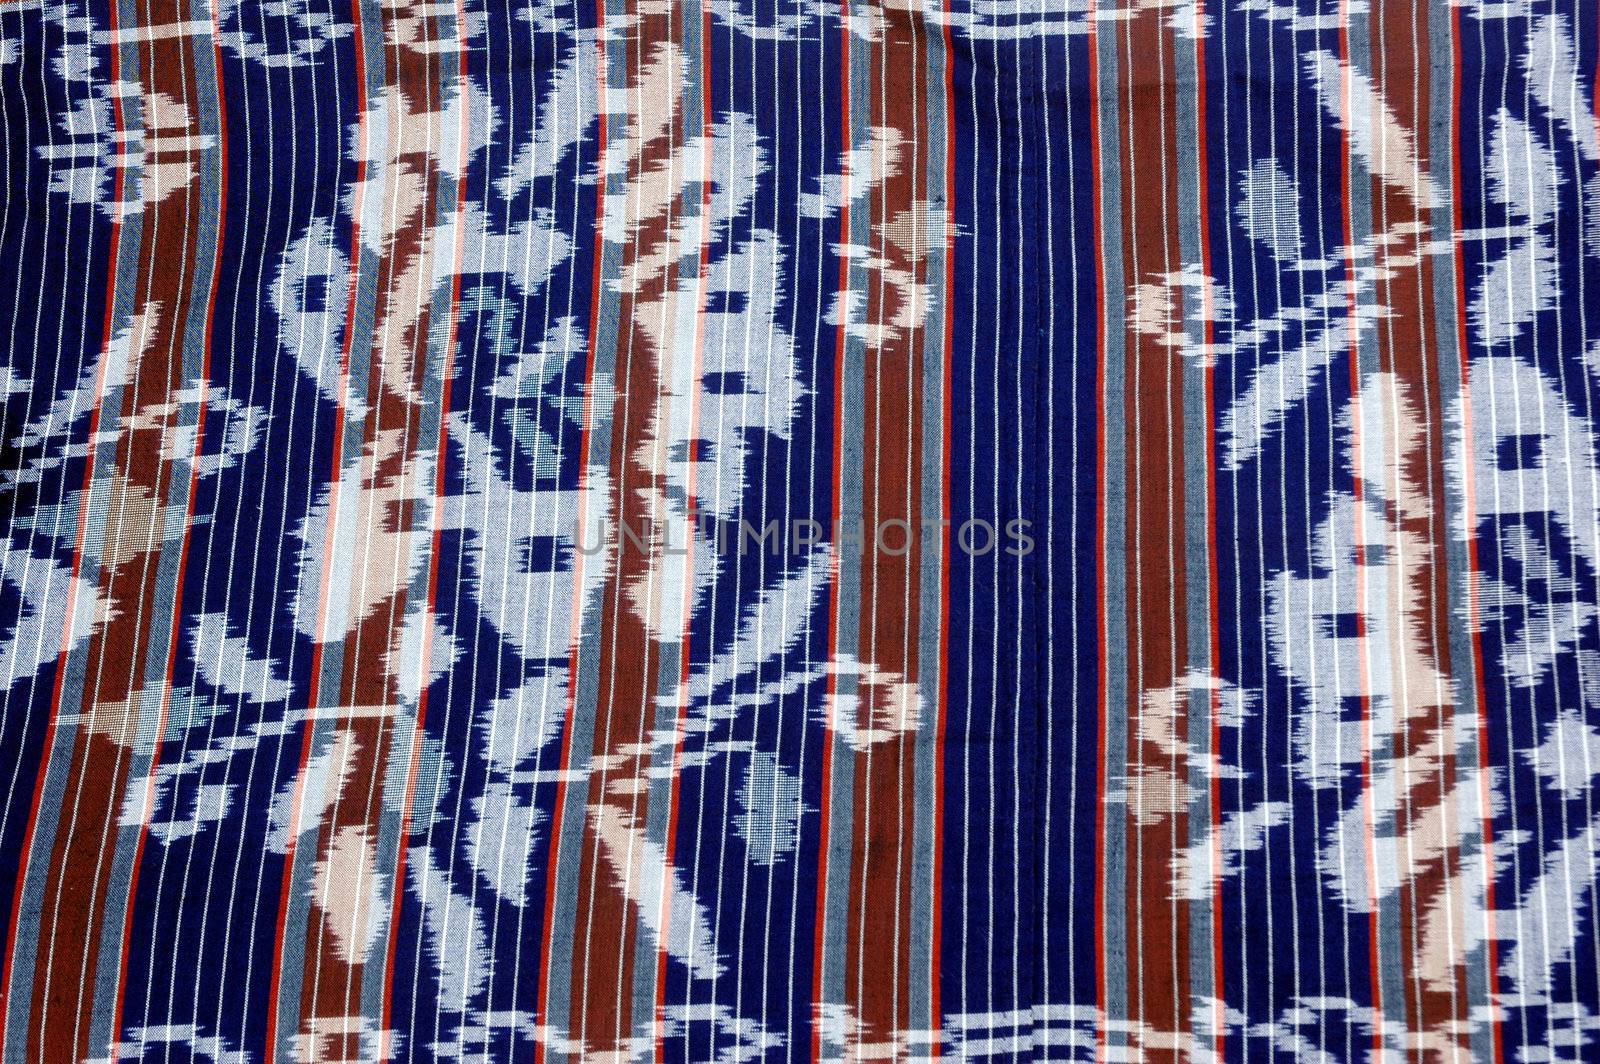 Indonesian fabric design details  by antonihalim